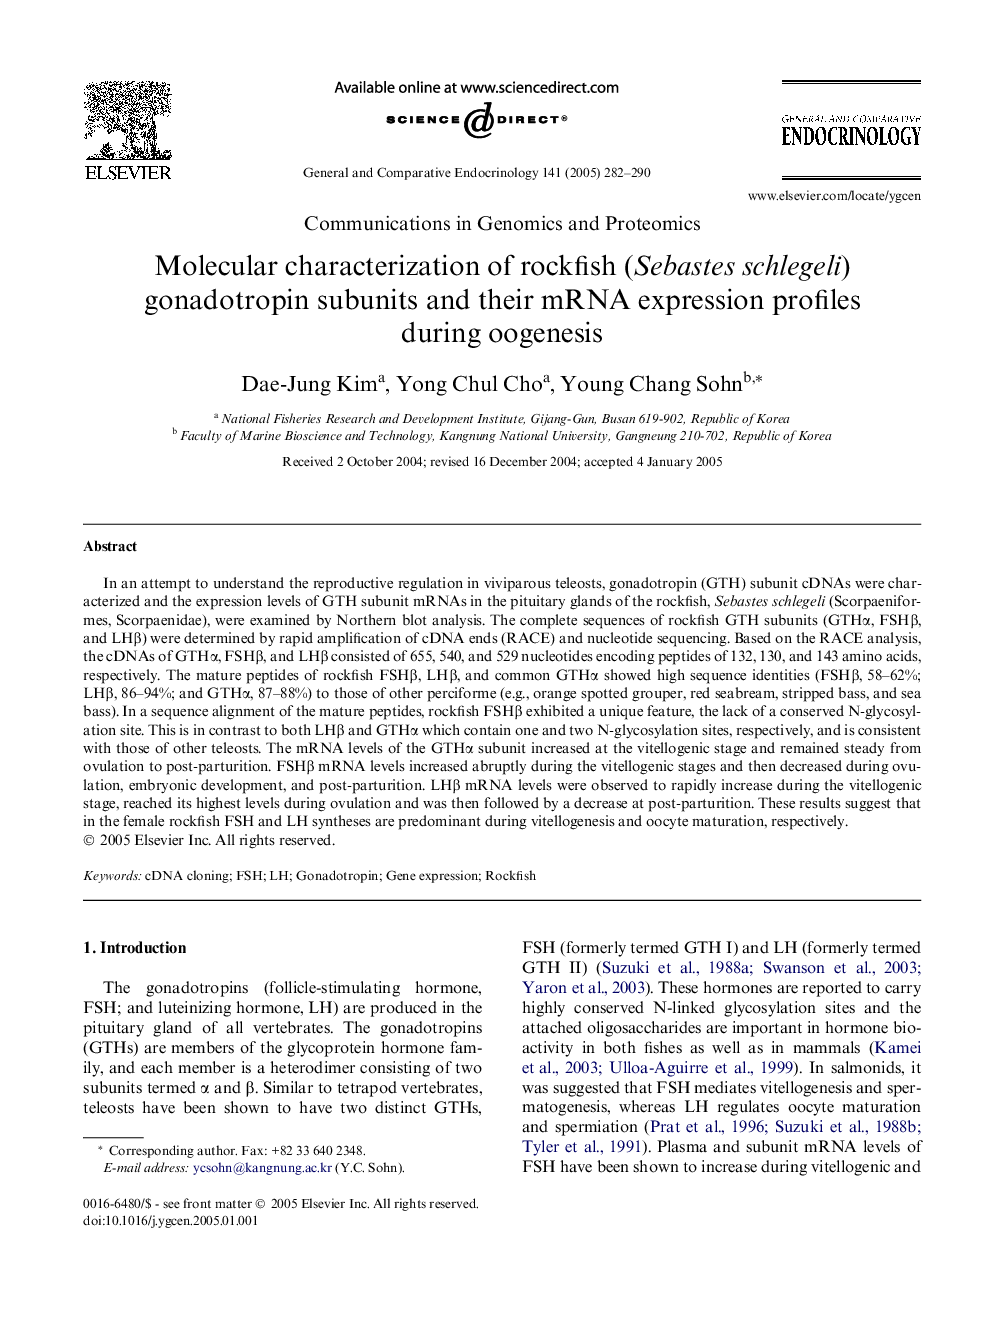 Molecular characterization of rockfish (Sebastes schlegeli) gonadotropin subunits and their mRNA expression profiles during oogenesis